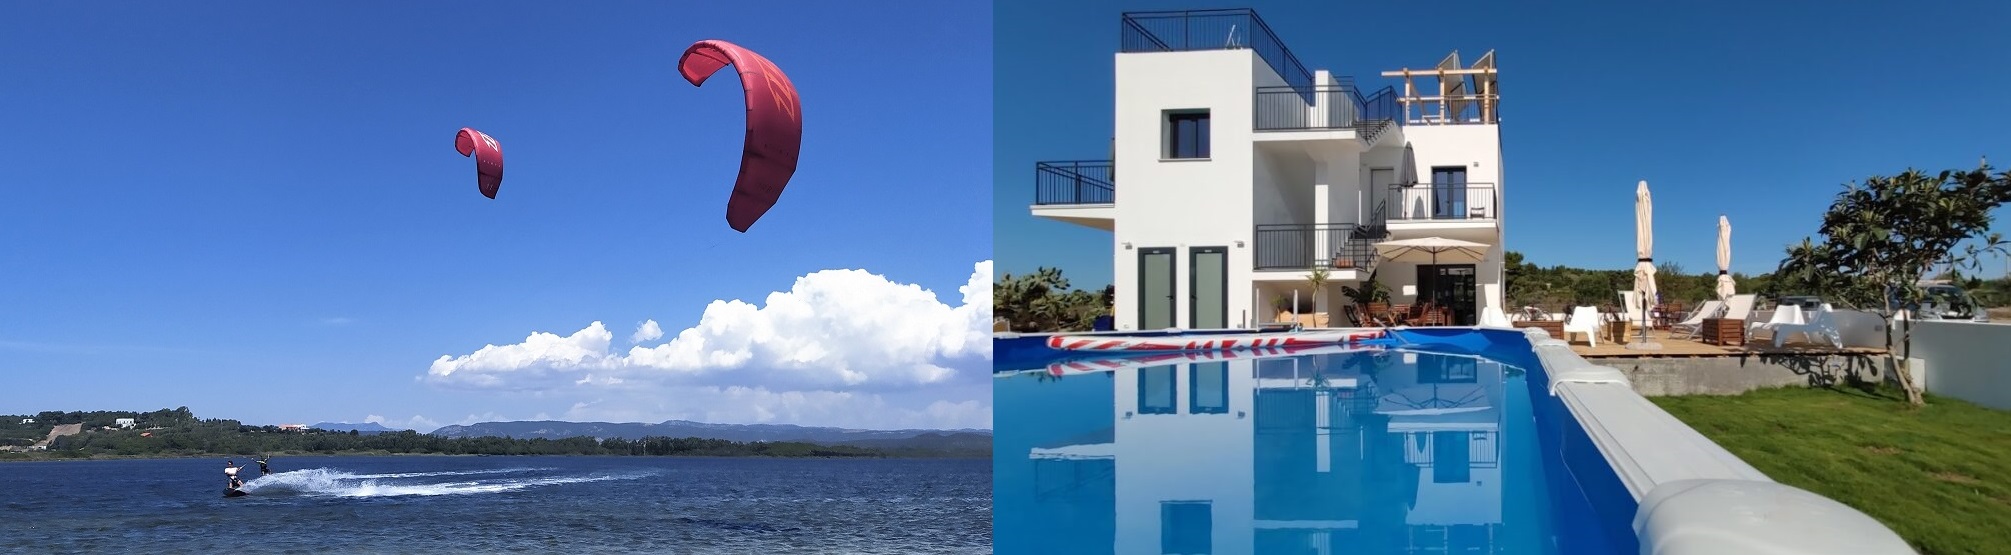 Kite Rental and Accommodation in Punta Trettu, the best Kite Spot